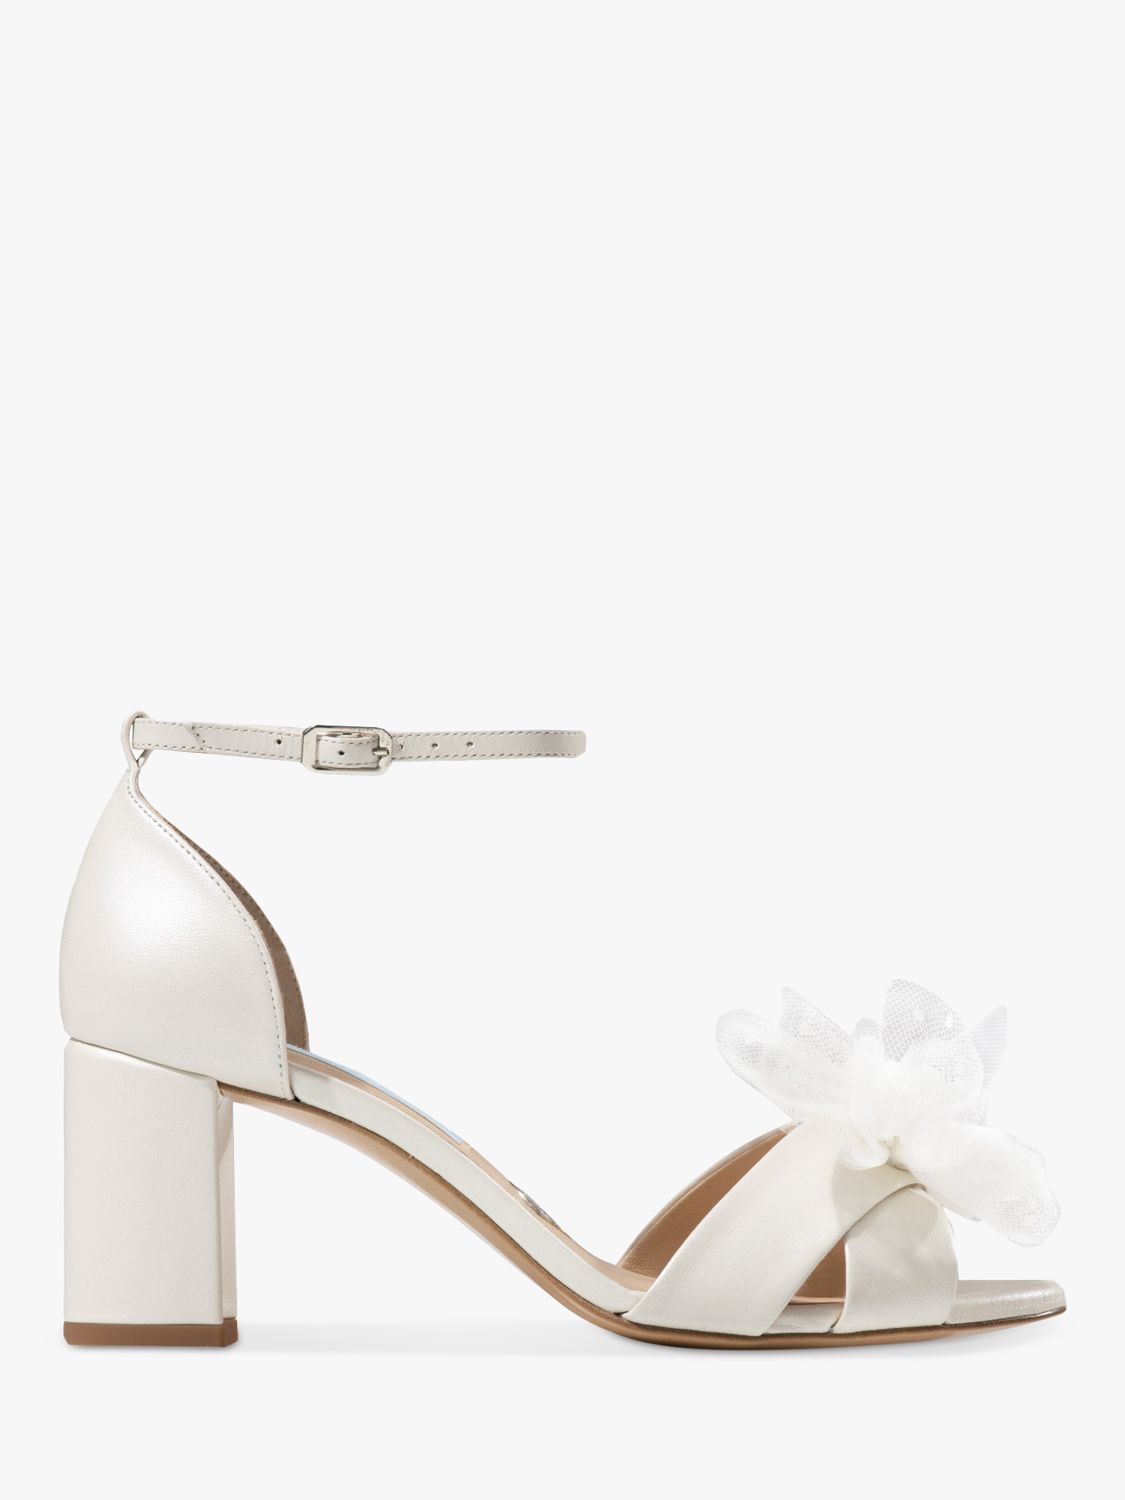 Charlotte Mills Ida Wide Fit Block Heel Wedding Shoes, Ivory Pearl